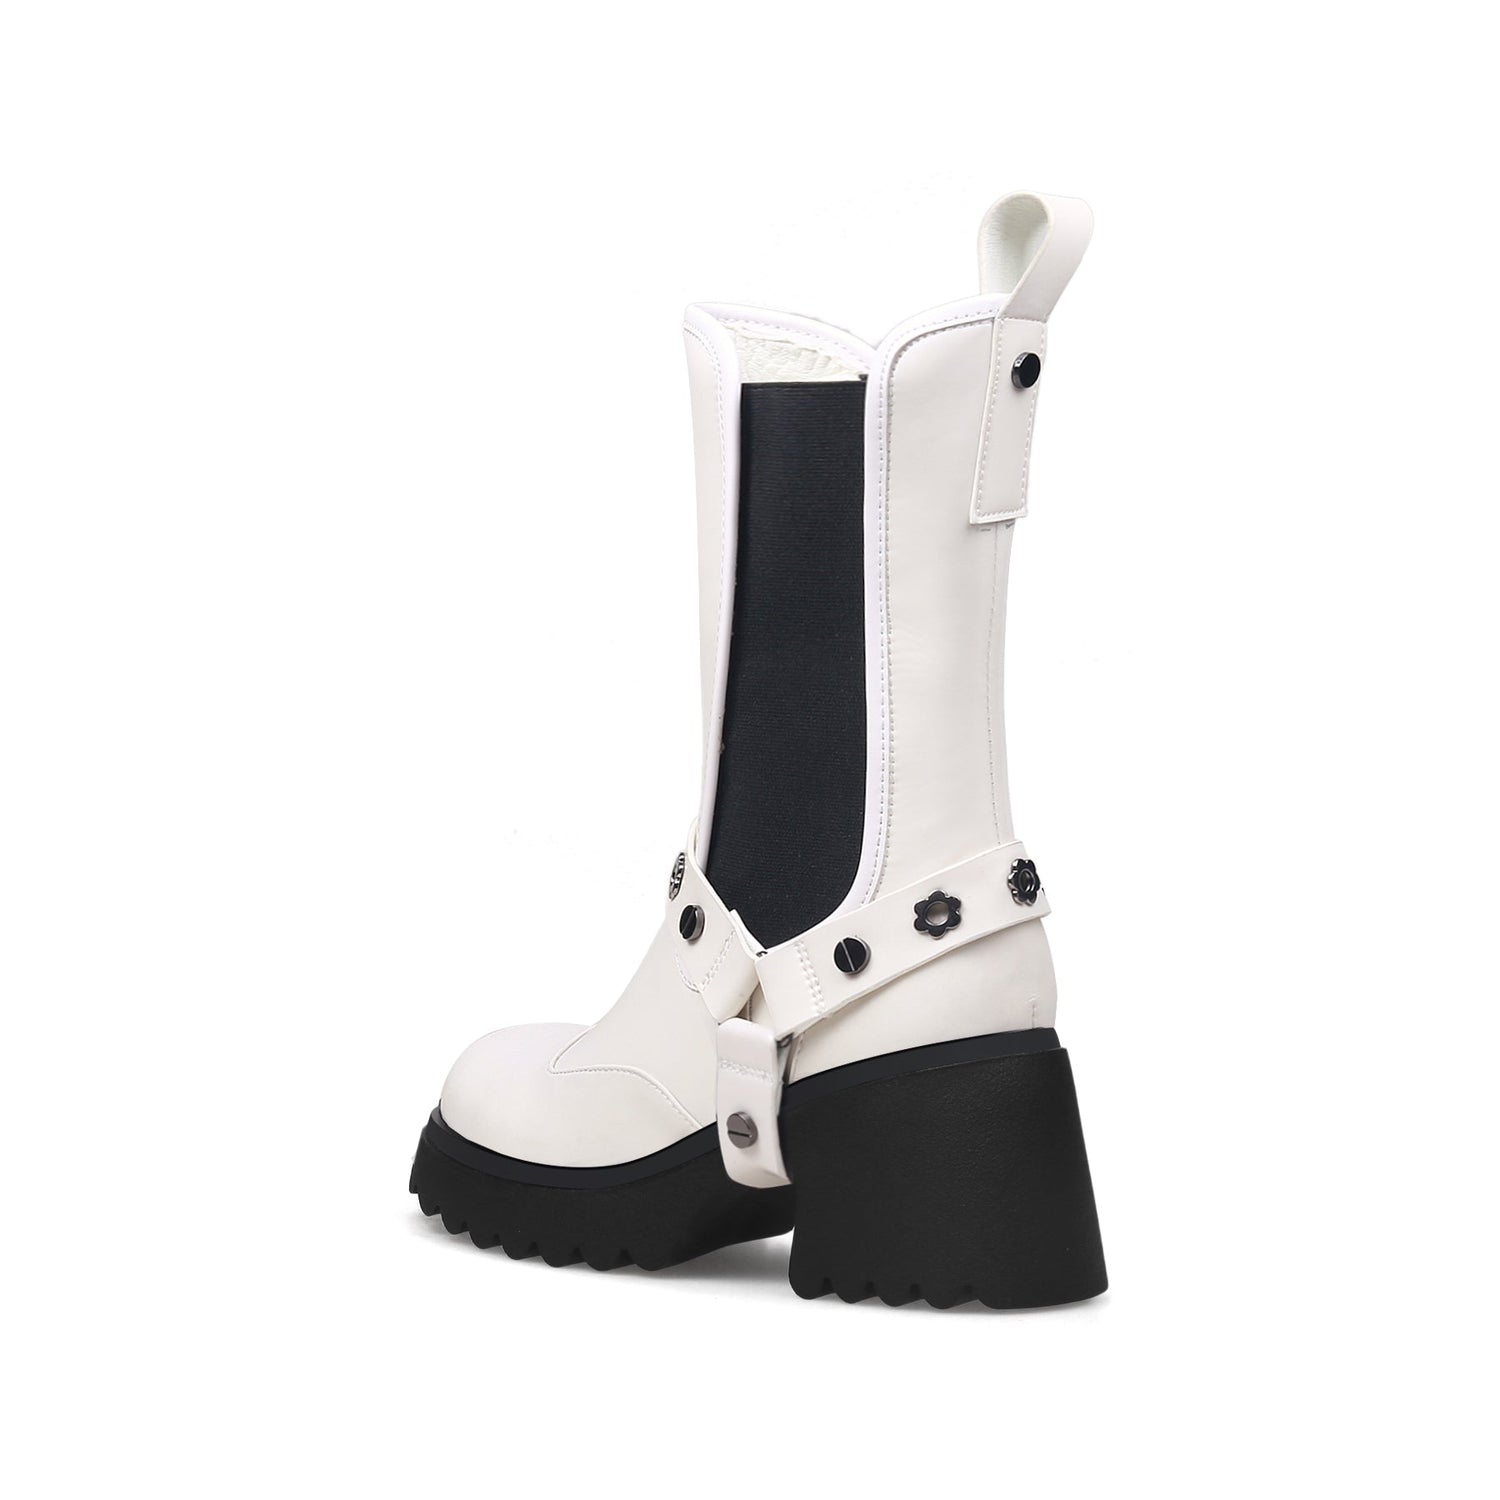 Patrol Strap Patent White Boots - 0cm